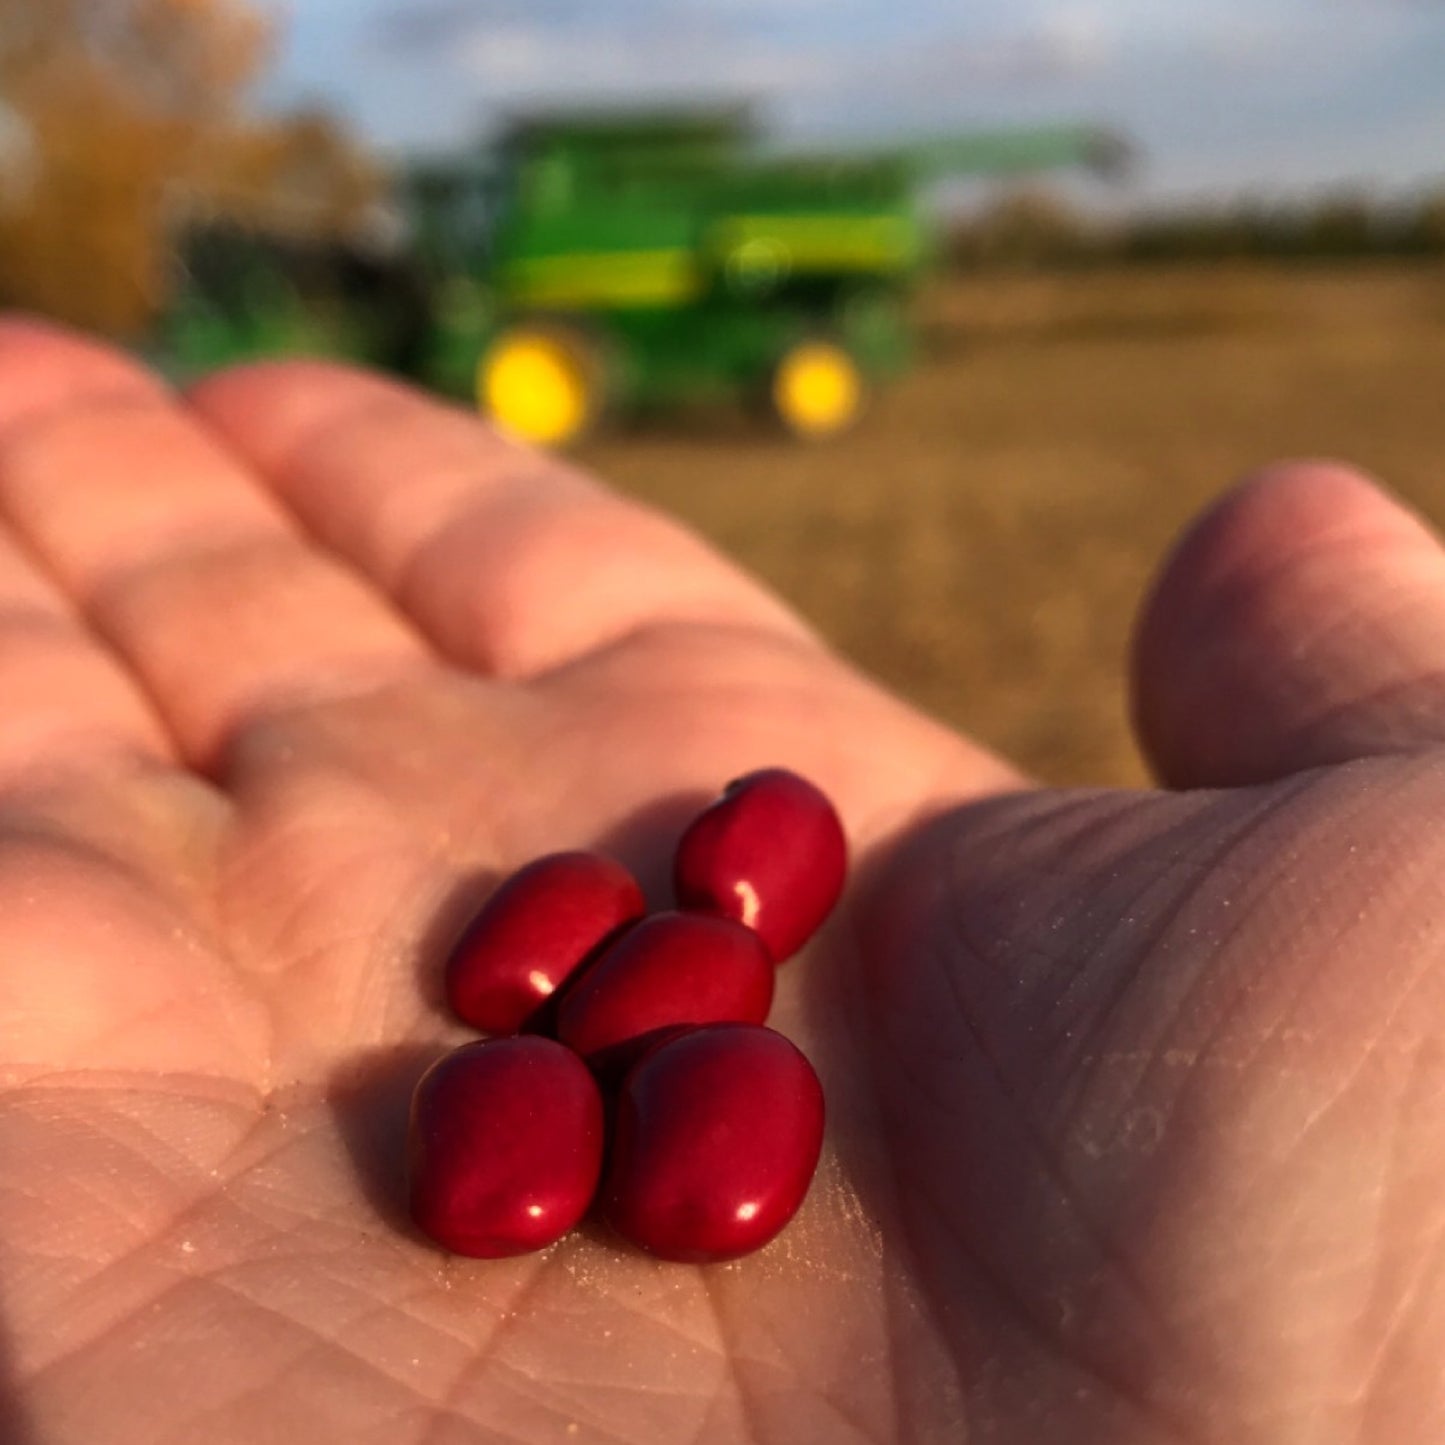 Red Beans // Michigan Grown, USDA Organic Certified, Non-GMO